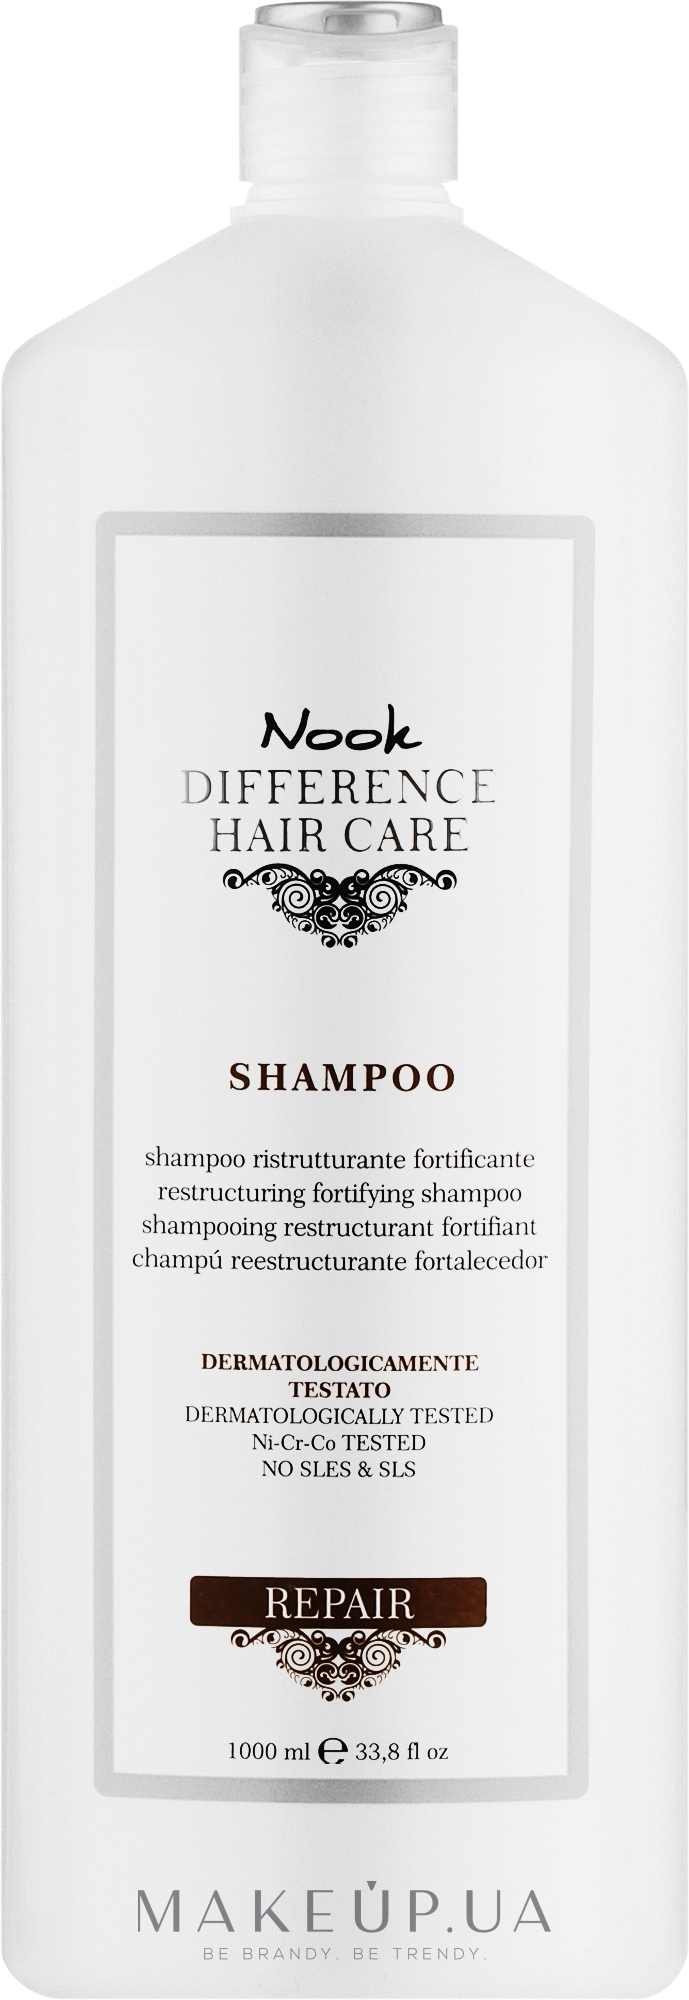 Шампунь реструктурирующий - Nook DHC Repair Shampoo  — фото 1000ml